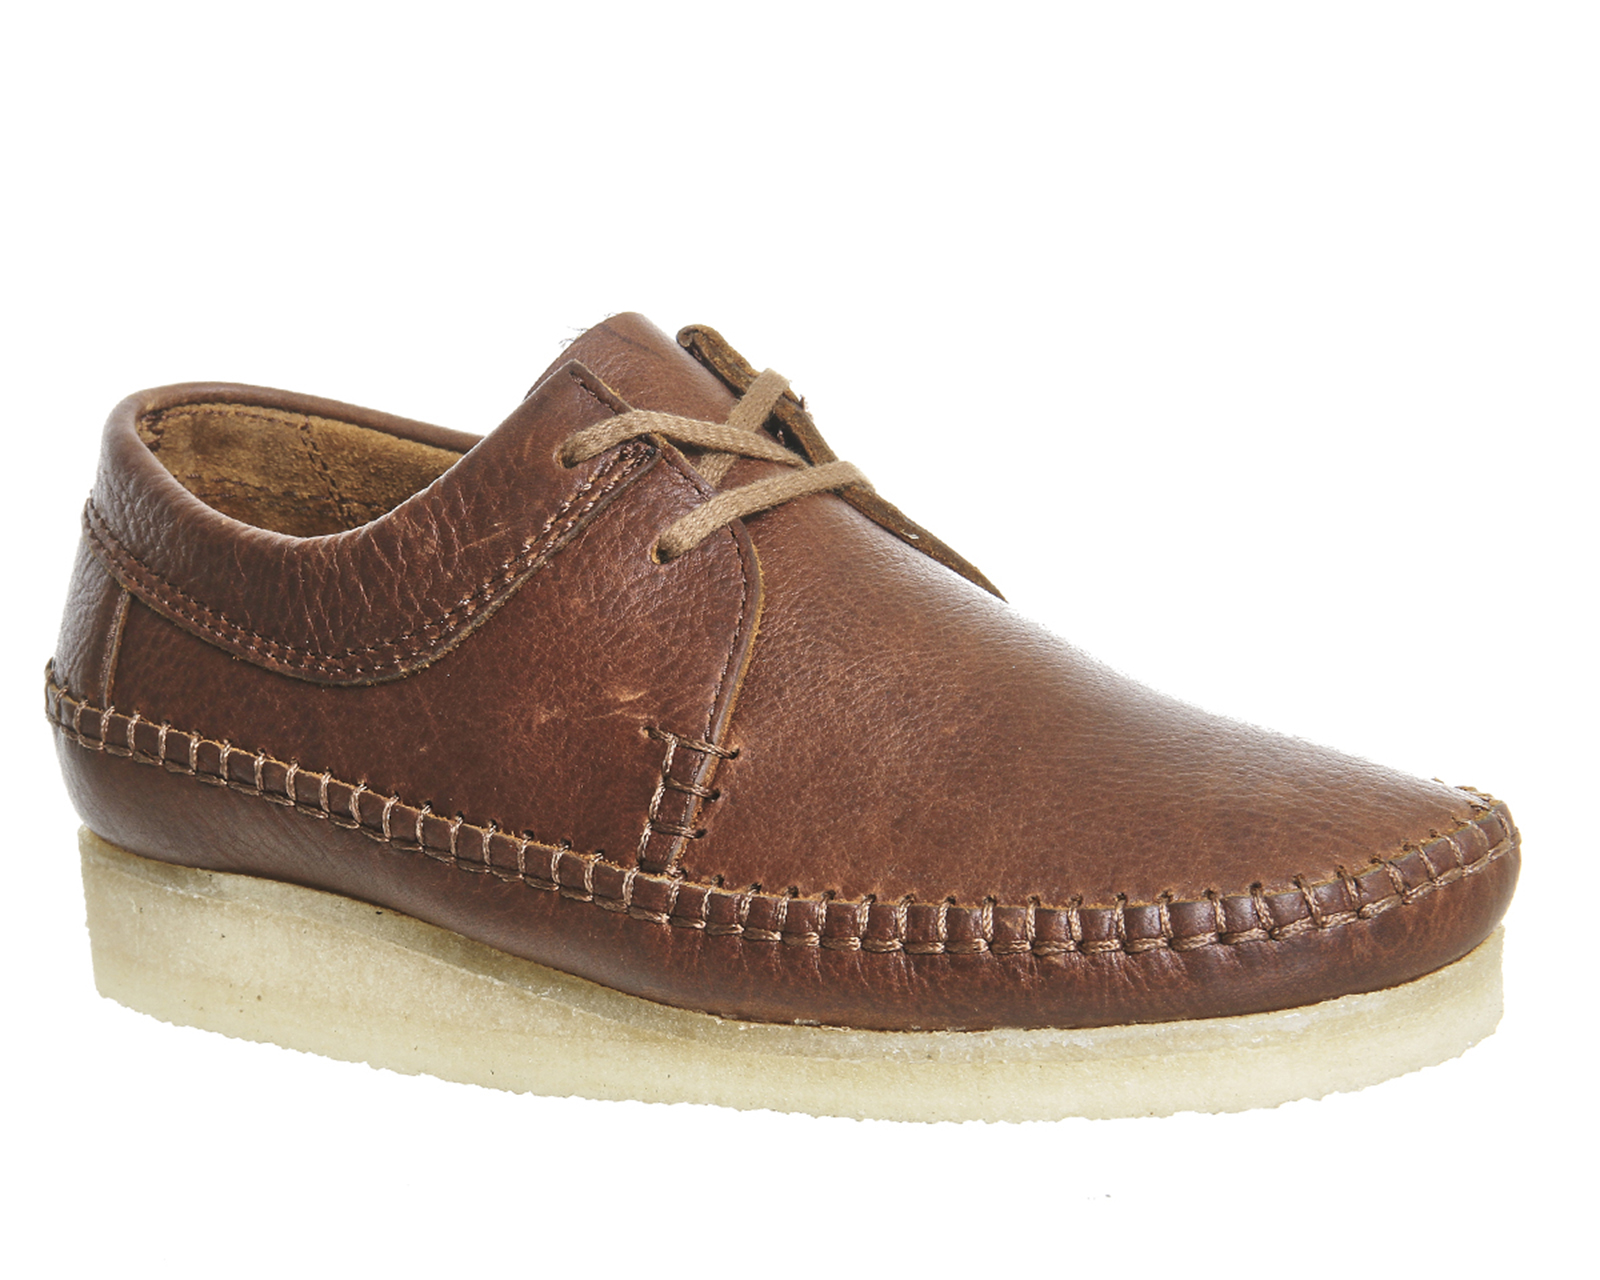 Clarks OriginalsWeaver ShoeTan Leather